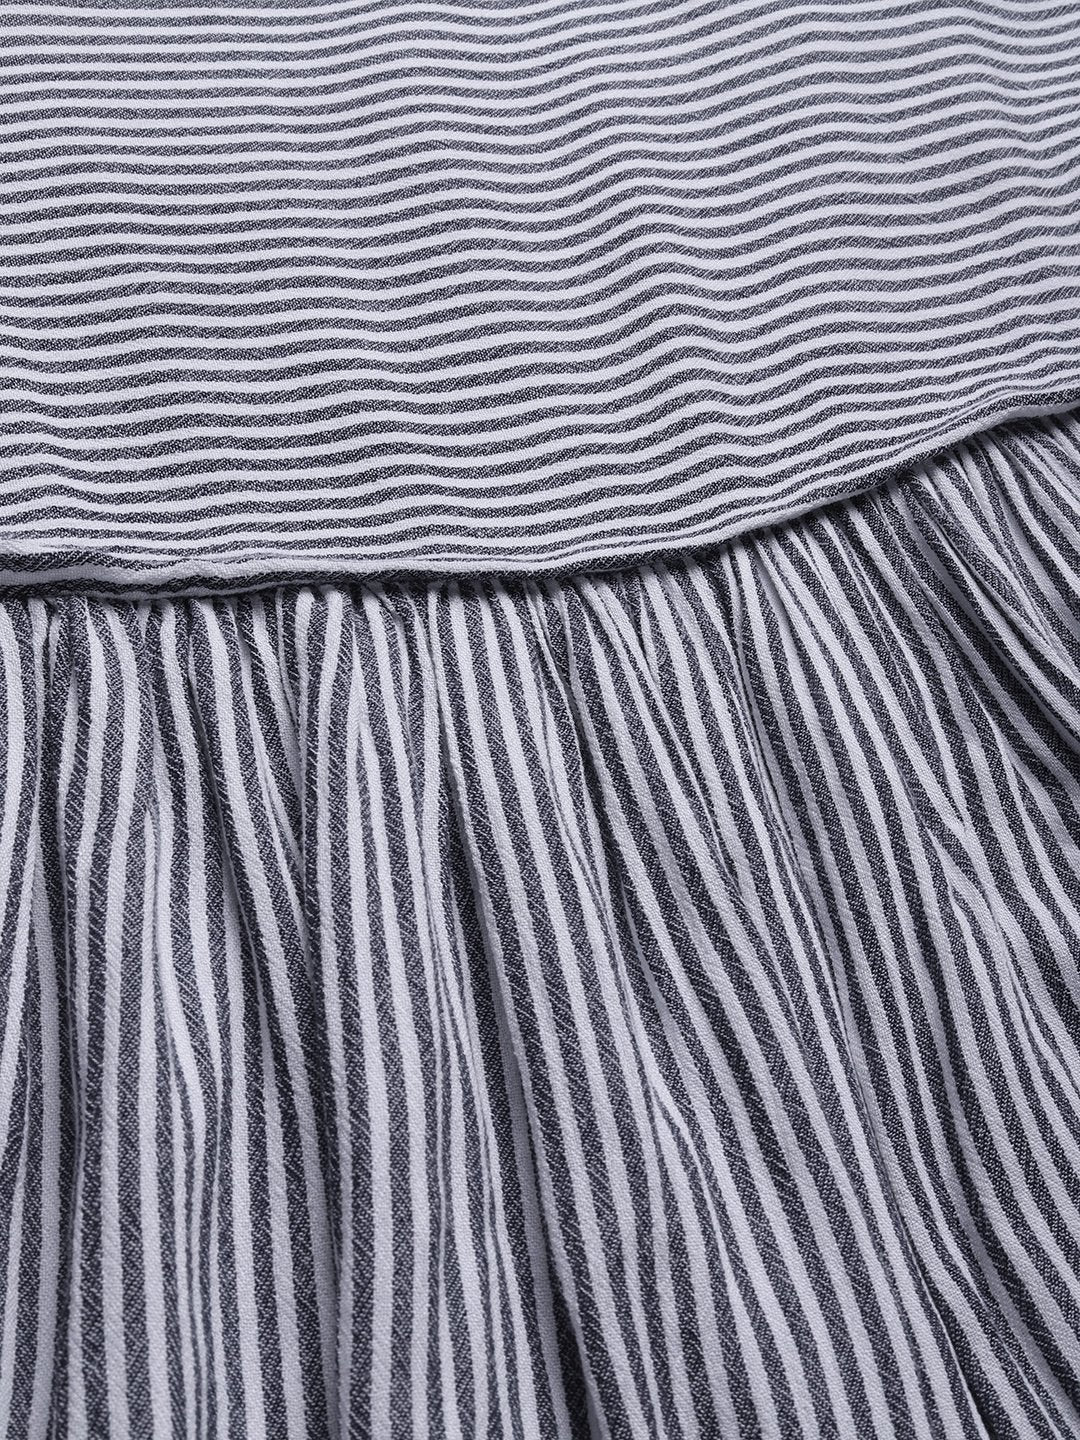 Buy Women Boat Neck Stripe Gathered Dress Online in India - The Meraki ...